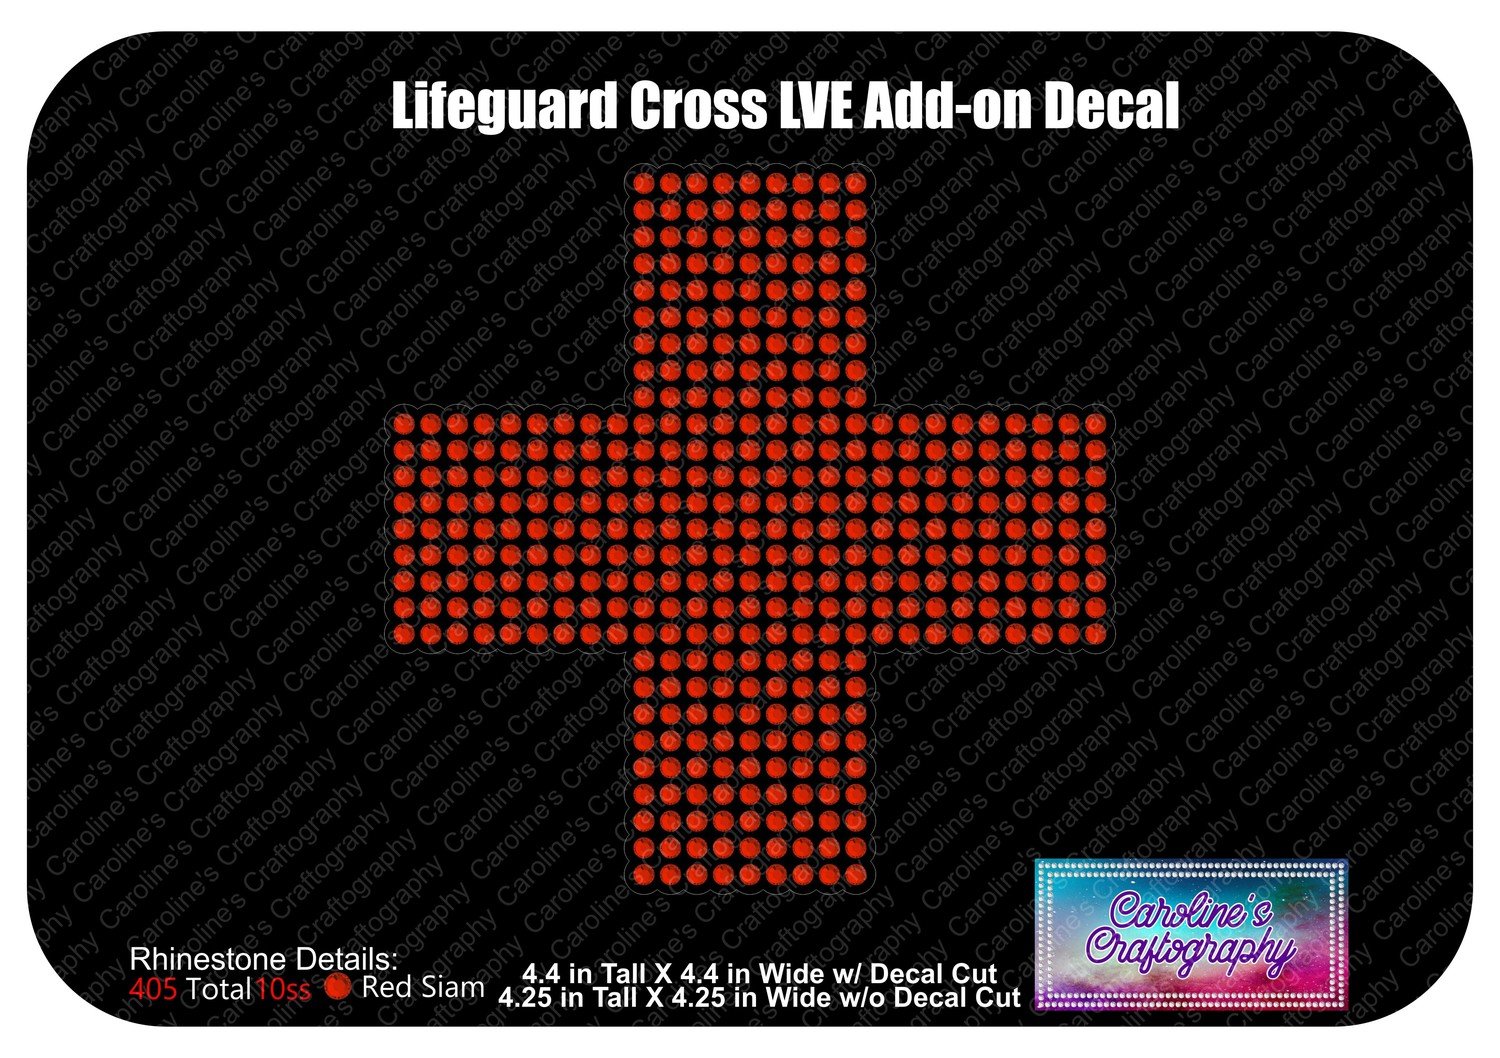 Lifeguard Cross LVE Add-on Decal